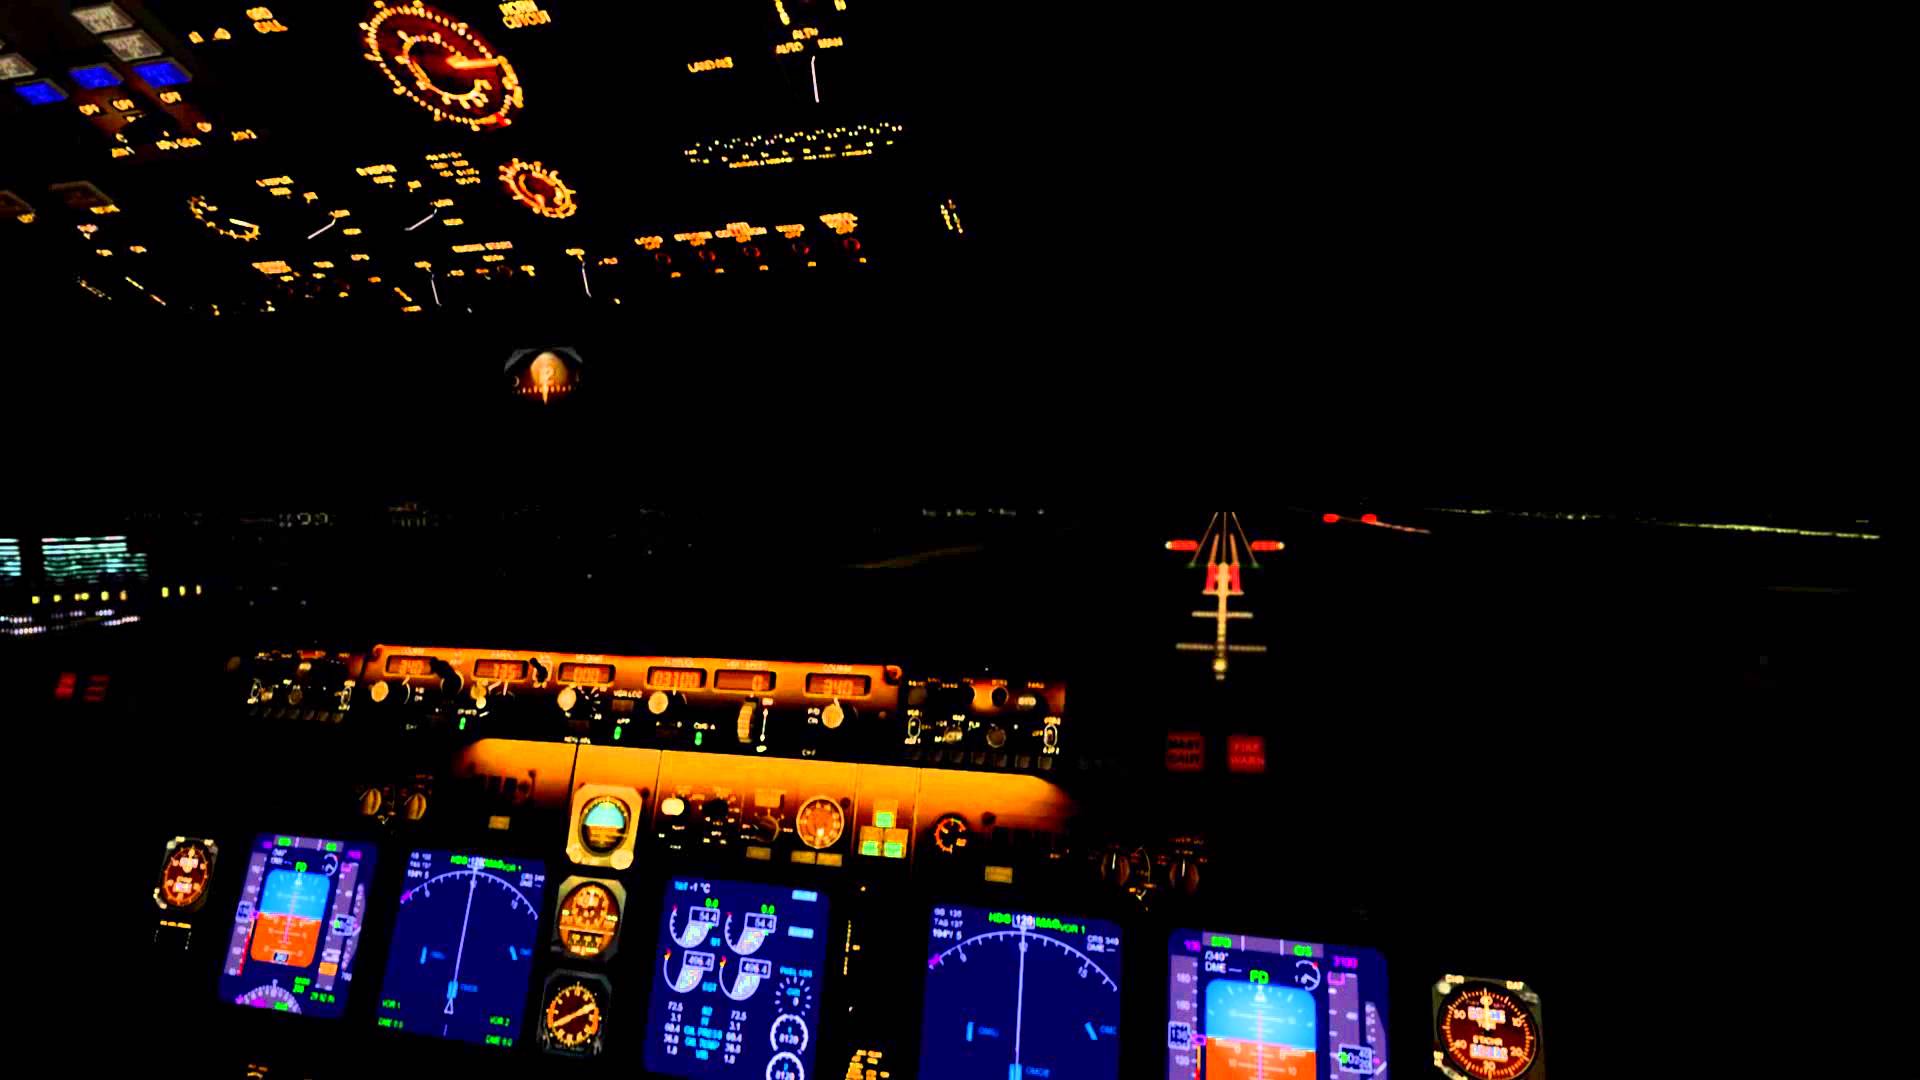 boeing 737 cockpit hd